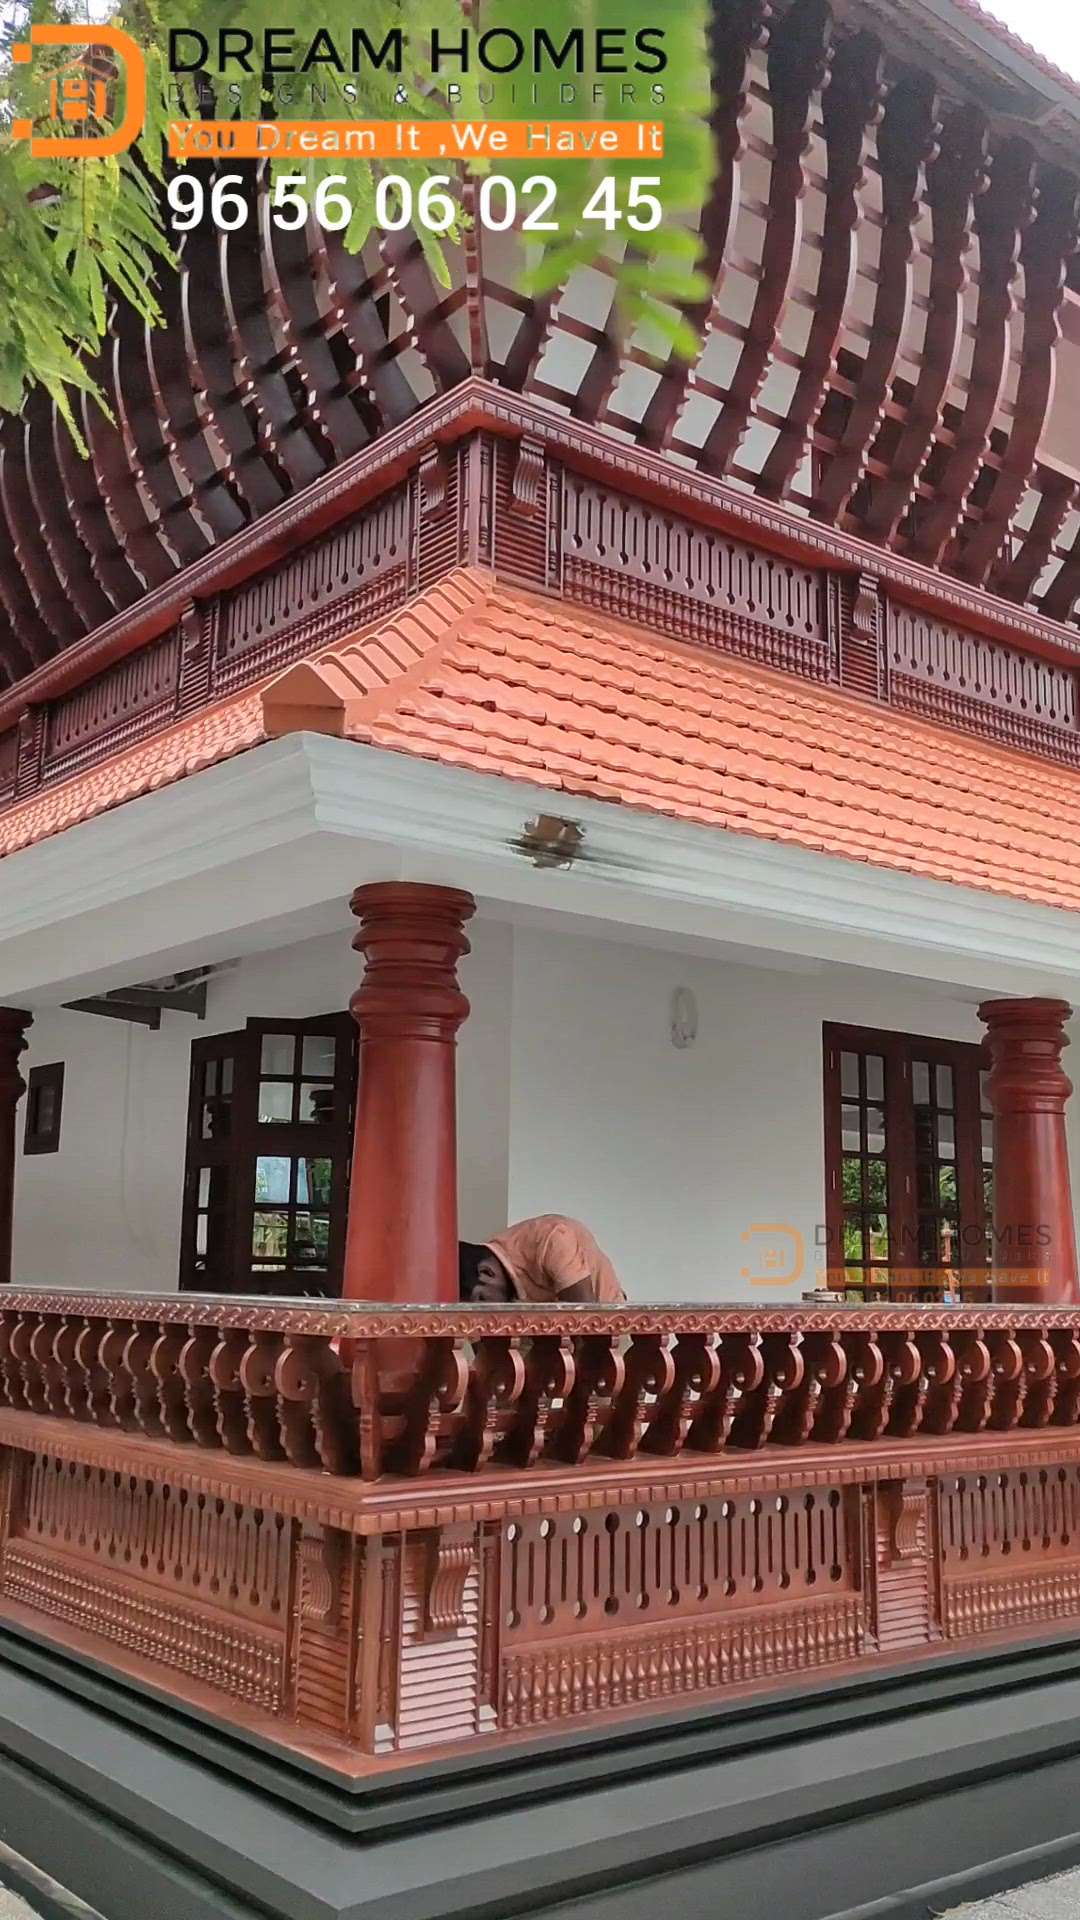 "DREAM HOMES DESIGNS & BUILDERS "
            You Dream It, We Have It'

       "Kerala's No 1 Architect for Traditional Homes"

#traditionalhome #traditiona

"3800 സ്‌ക്വയർ ഫീറ്റിൽ 5 ബെഡ്‌റൂംസ് അറ്റാച്ഡ്, പൂമുഖം, വരാന്ത, ലിവിങ്, നടുമുറ്റം, ഡയനിങ് ഏരിയ, കിച്ചൺ, വർക്ക്‌ ഏരിയ, പൂജാസ്‌പെയ്‌സ്, ഫസ്റ്റ് ഫ്‌ളോർ ഓപ്പൺ ഹാൾ, 3 സൈഡ് ബാൽക്കണി, വരാന്ത, എന്നിവയെല്ലാം ഉൾപ്പെടുത്തി ഒരത്യുഗ്രൻ നാലുകെട്ട് വീട് എറണാകുളം ജില്ലയിൽ"

ടോട്ടൽ കോസ്റ്റ് : 1,17,80,000/cr

🏵️☘️️ ശുഭരാത്രി 
🏵️️നല്ല ചിന്തകൾ കൊണ്ടും നല്ല സംസ്കാരം കൊണ്ടു മാണ് ഒരു മനുഷ്യൻ വലിയവനാവുന്നത്.
🏵️️നല്ല ചിന്തകൾ നല്ല സ്വപ്നങ്ങളിലേയ്ക്കും 
നല്ല സ്വപ്നങ്ങൾ നല്ല ആഗ്രഹങ്ങളിലേക്കും 
നല്ല ആഗ്രഹങ്ങൾ നല്ല പ്രവൃത്തിയിലേക്കും 
🏵️️നല്ല പ്രവൃത്തികൾ നന്മയിലേക്കും നമ്മളെ നയിക്കും..
ചിന്തകളുടെ നിയന്ത്രണം കൈവിടരുത്.
️🏵️ ശുഭരാത്രി.....🏵️

"DREAM HOMES DESIGNS & BUILDERS "
            You Dream It, We Have It'

       "Kerala's No 1 Architect for Traditional Homes"

"A beautiful traditional structure  will be completed only with the presence of a good Ar